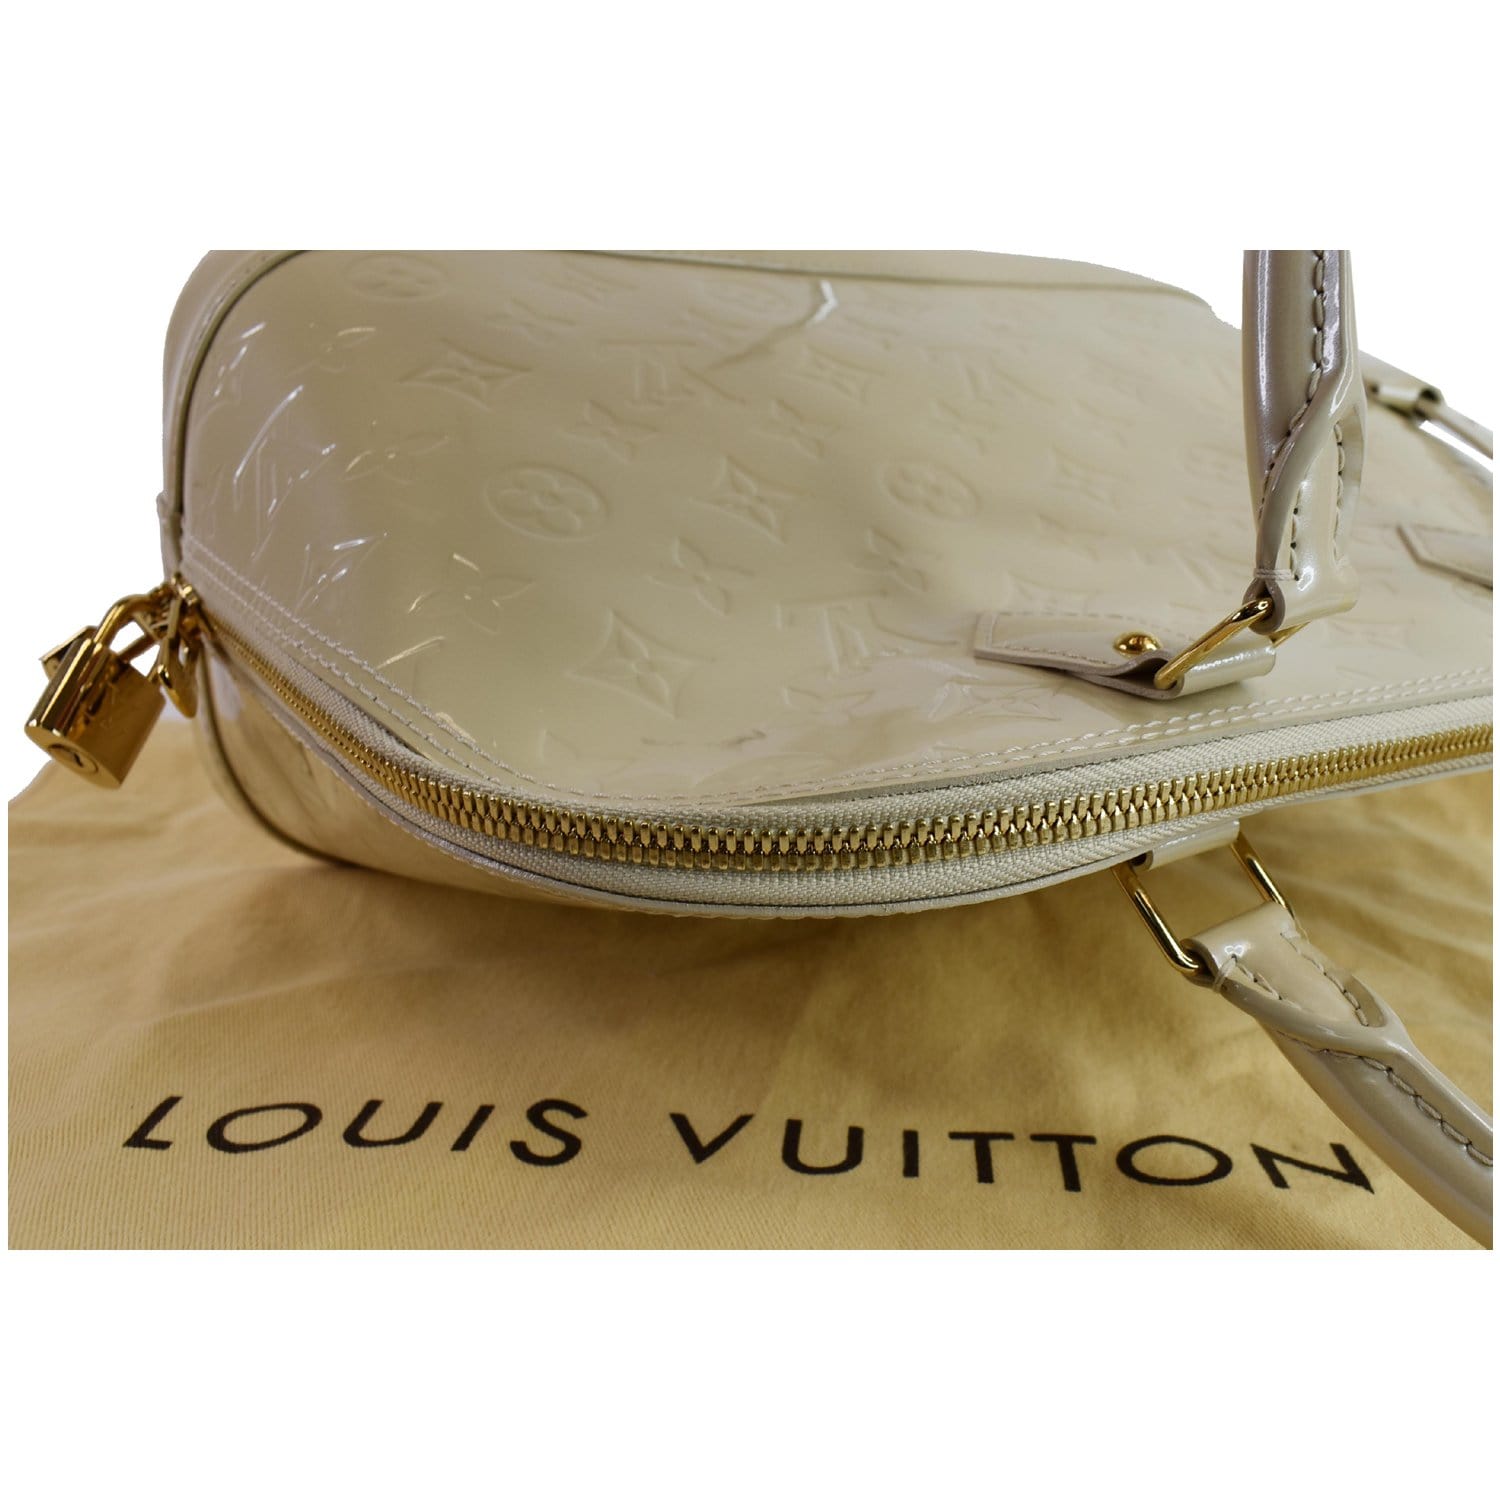 Louis Vuitton Alma PM Monogram Vernis Leather Satchel Bag